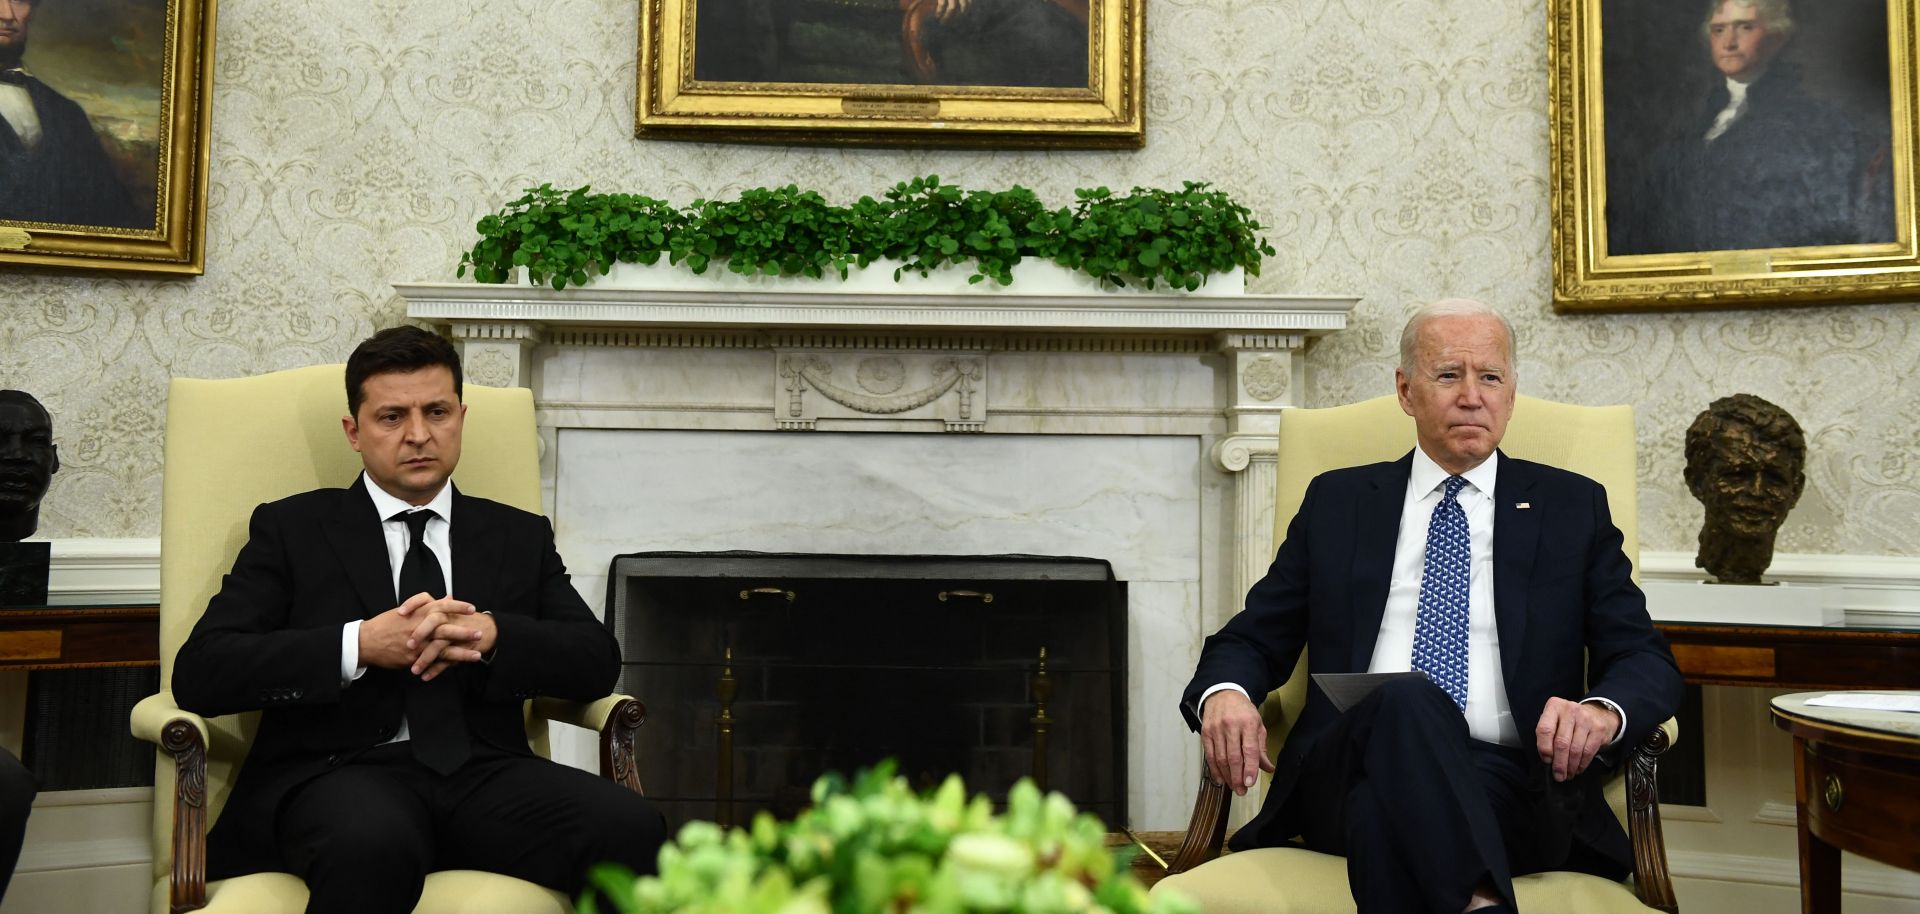 U.S. President Joe Biden (right) meets with Ukrainian President Volodymyr Zelensky in the Oval Office of the White House on Sept. 1, 2021.